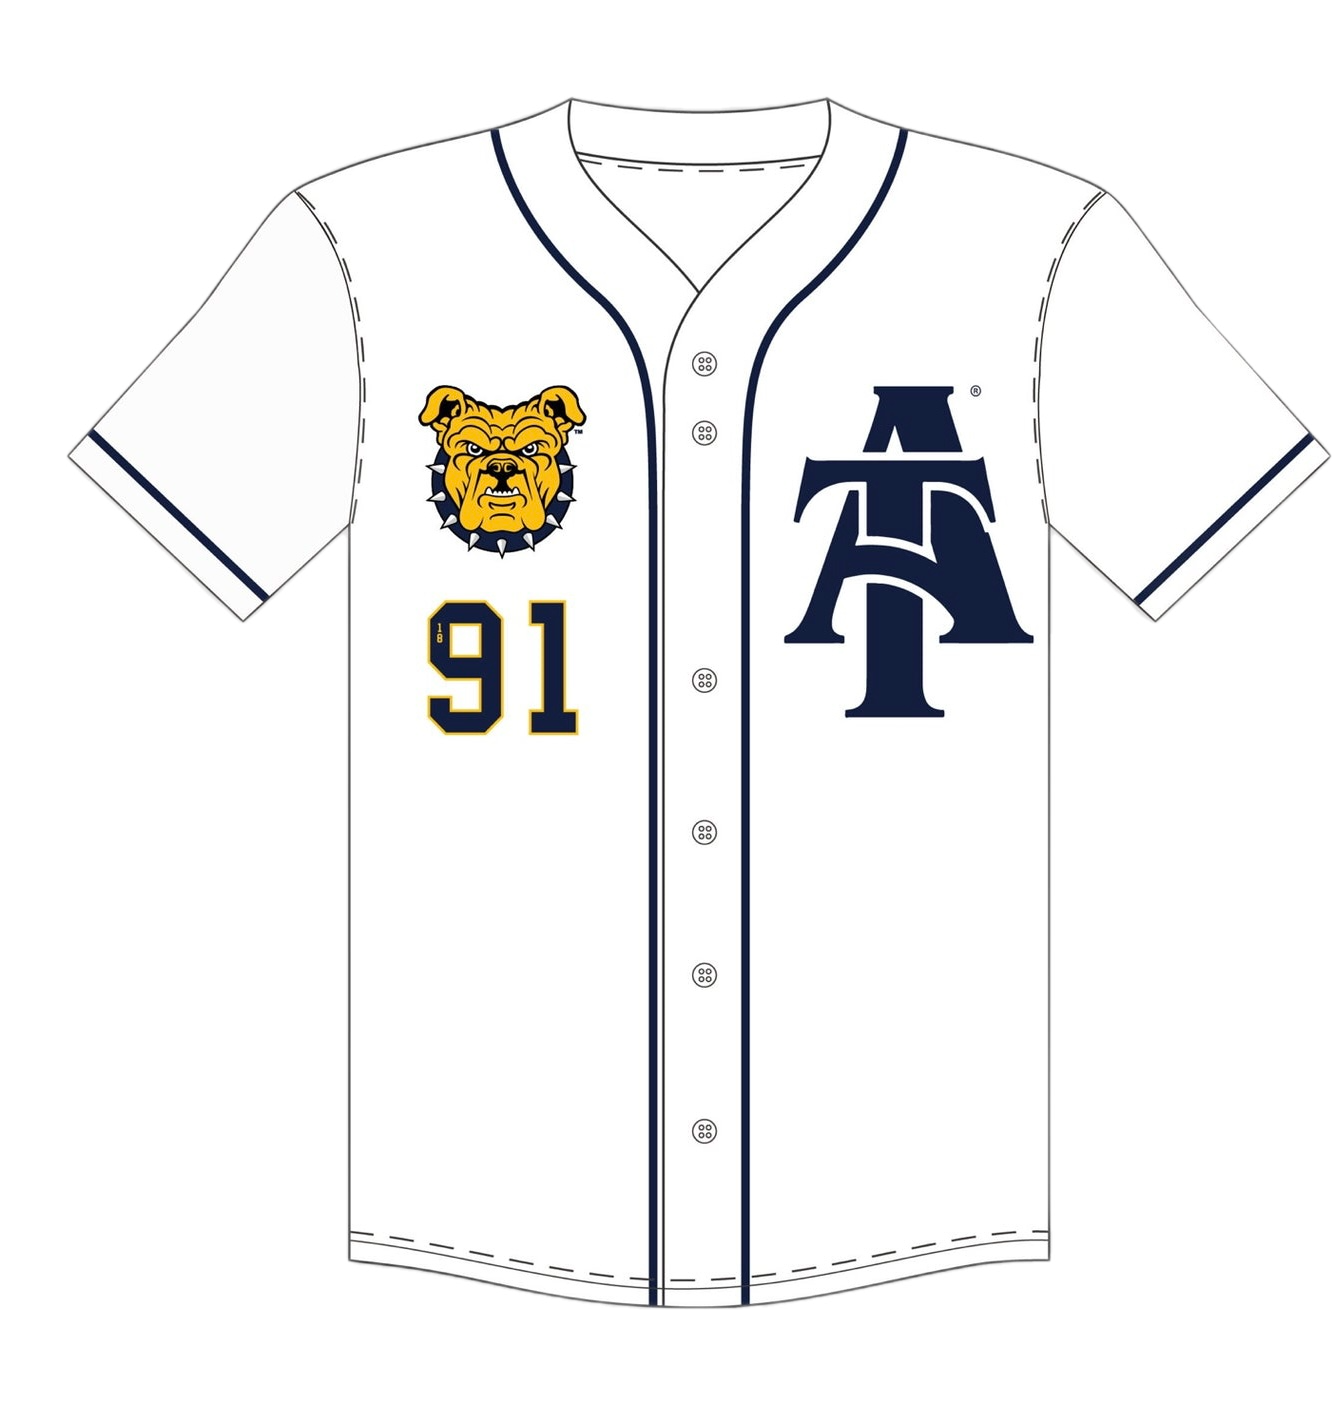 baseball jersey template png